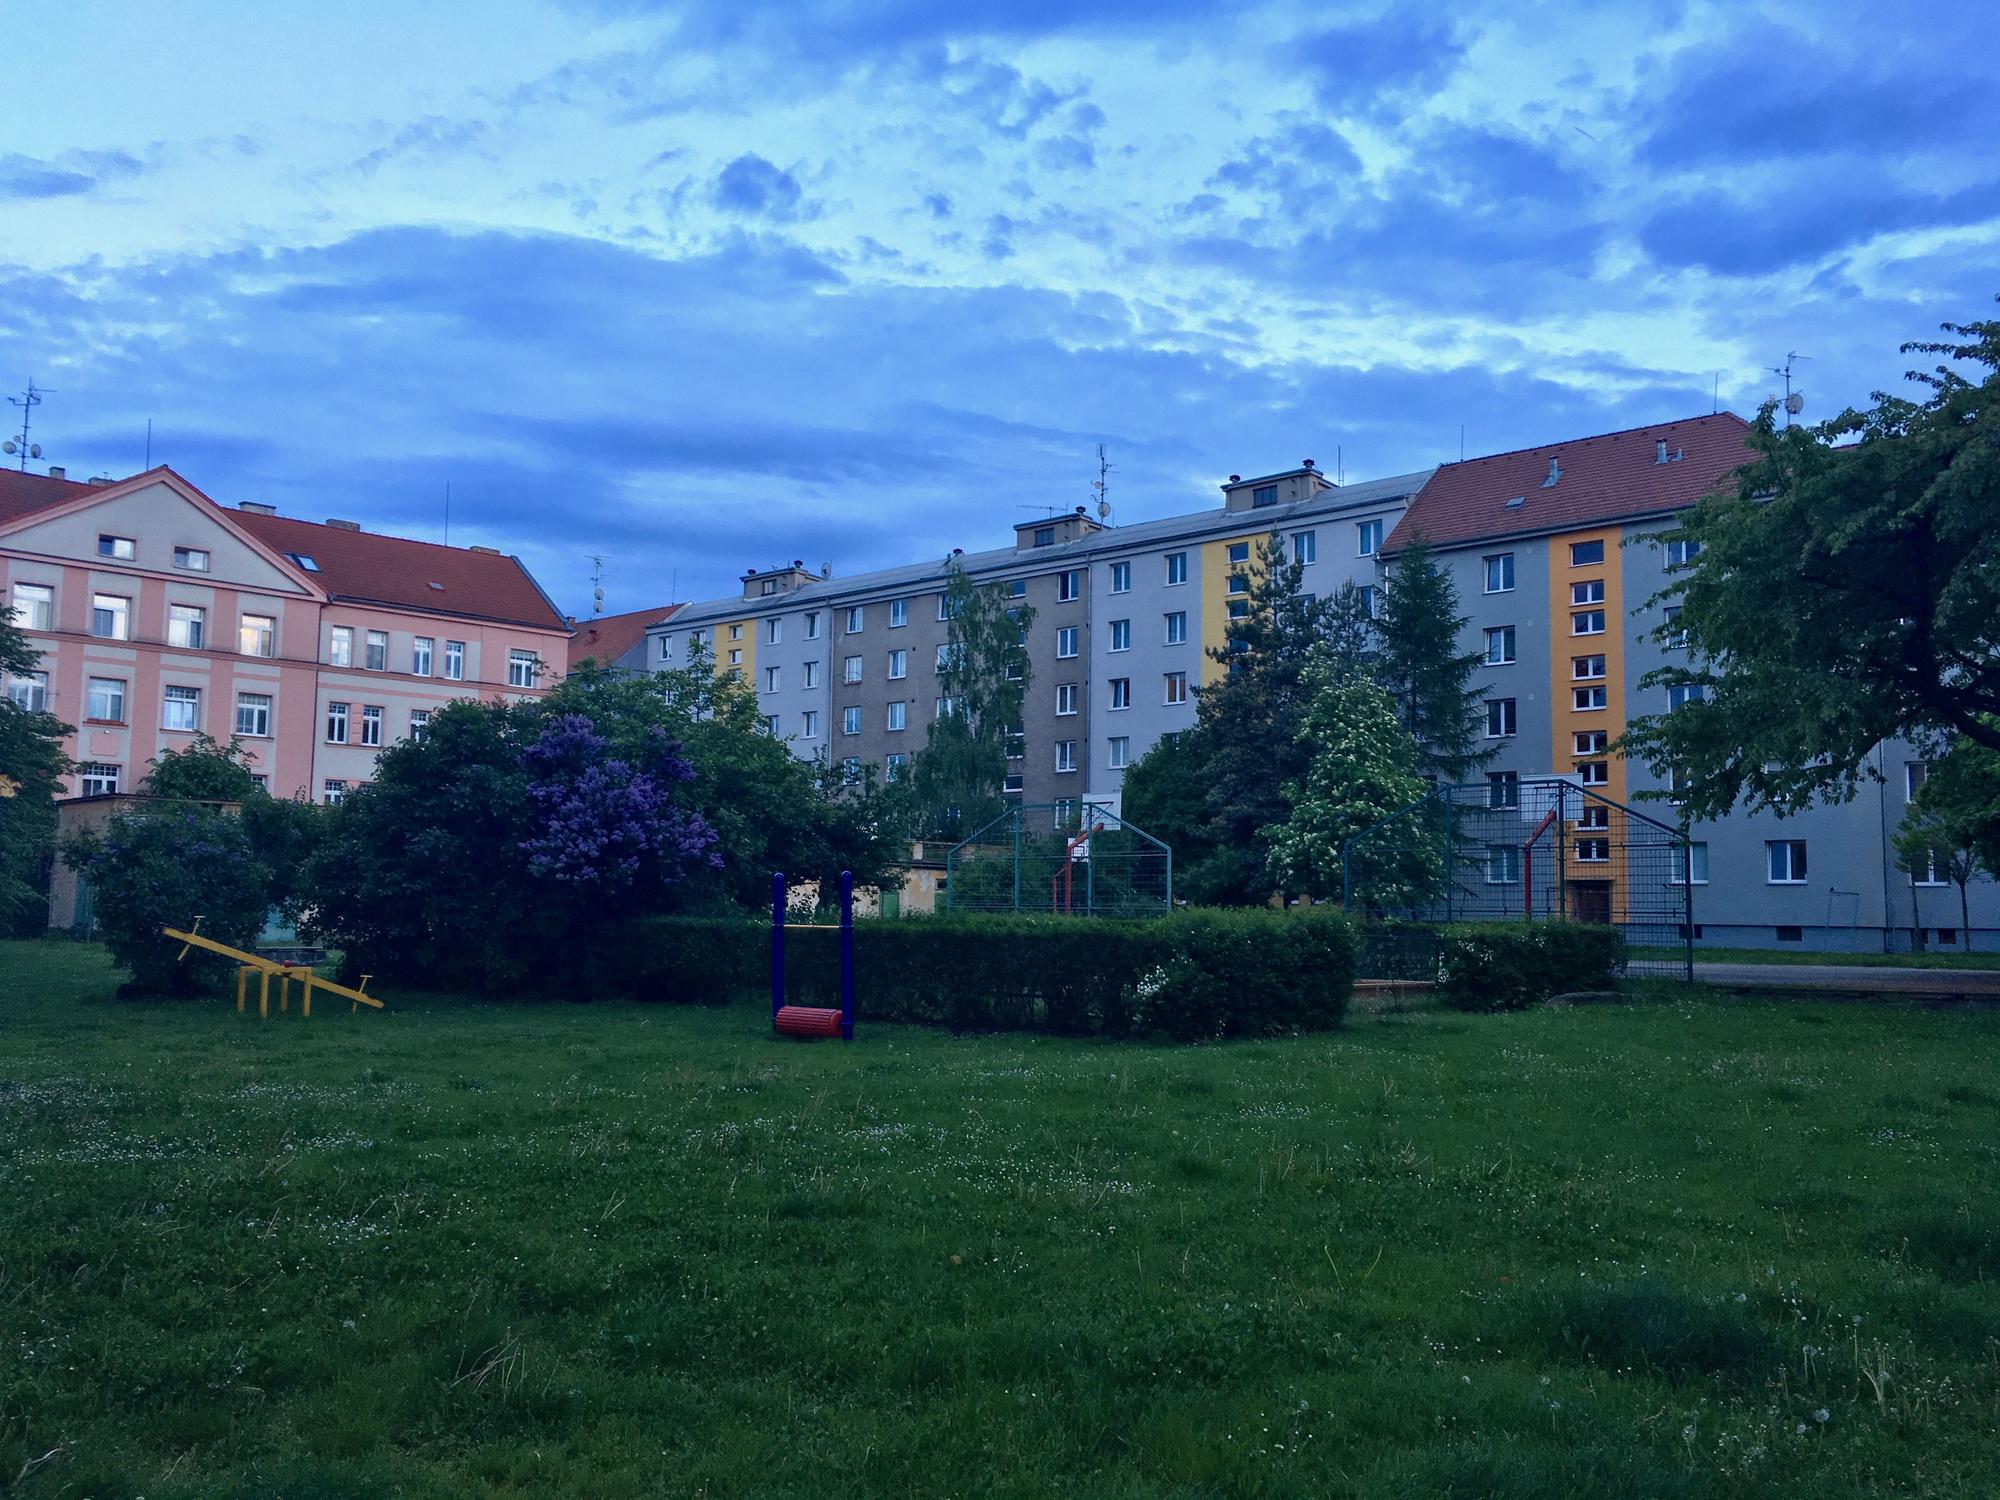 🇨🇿 Olomouc, Czech Republic, May 2017.